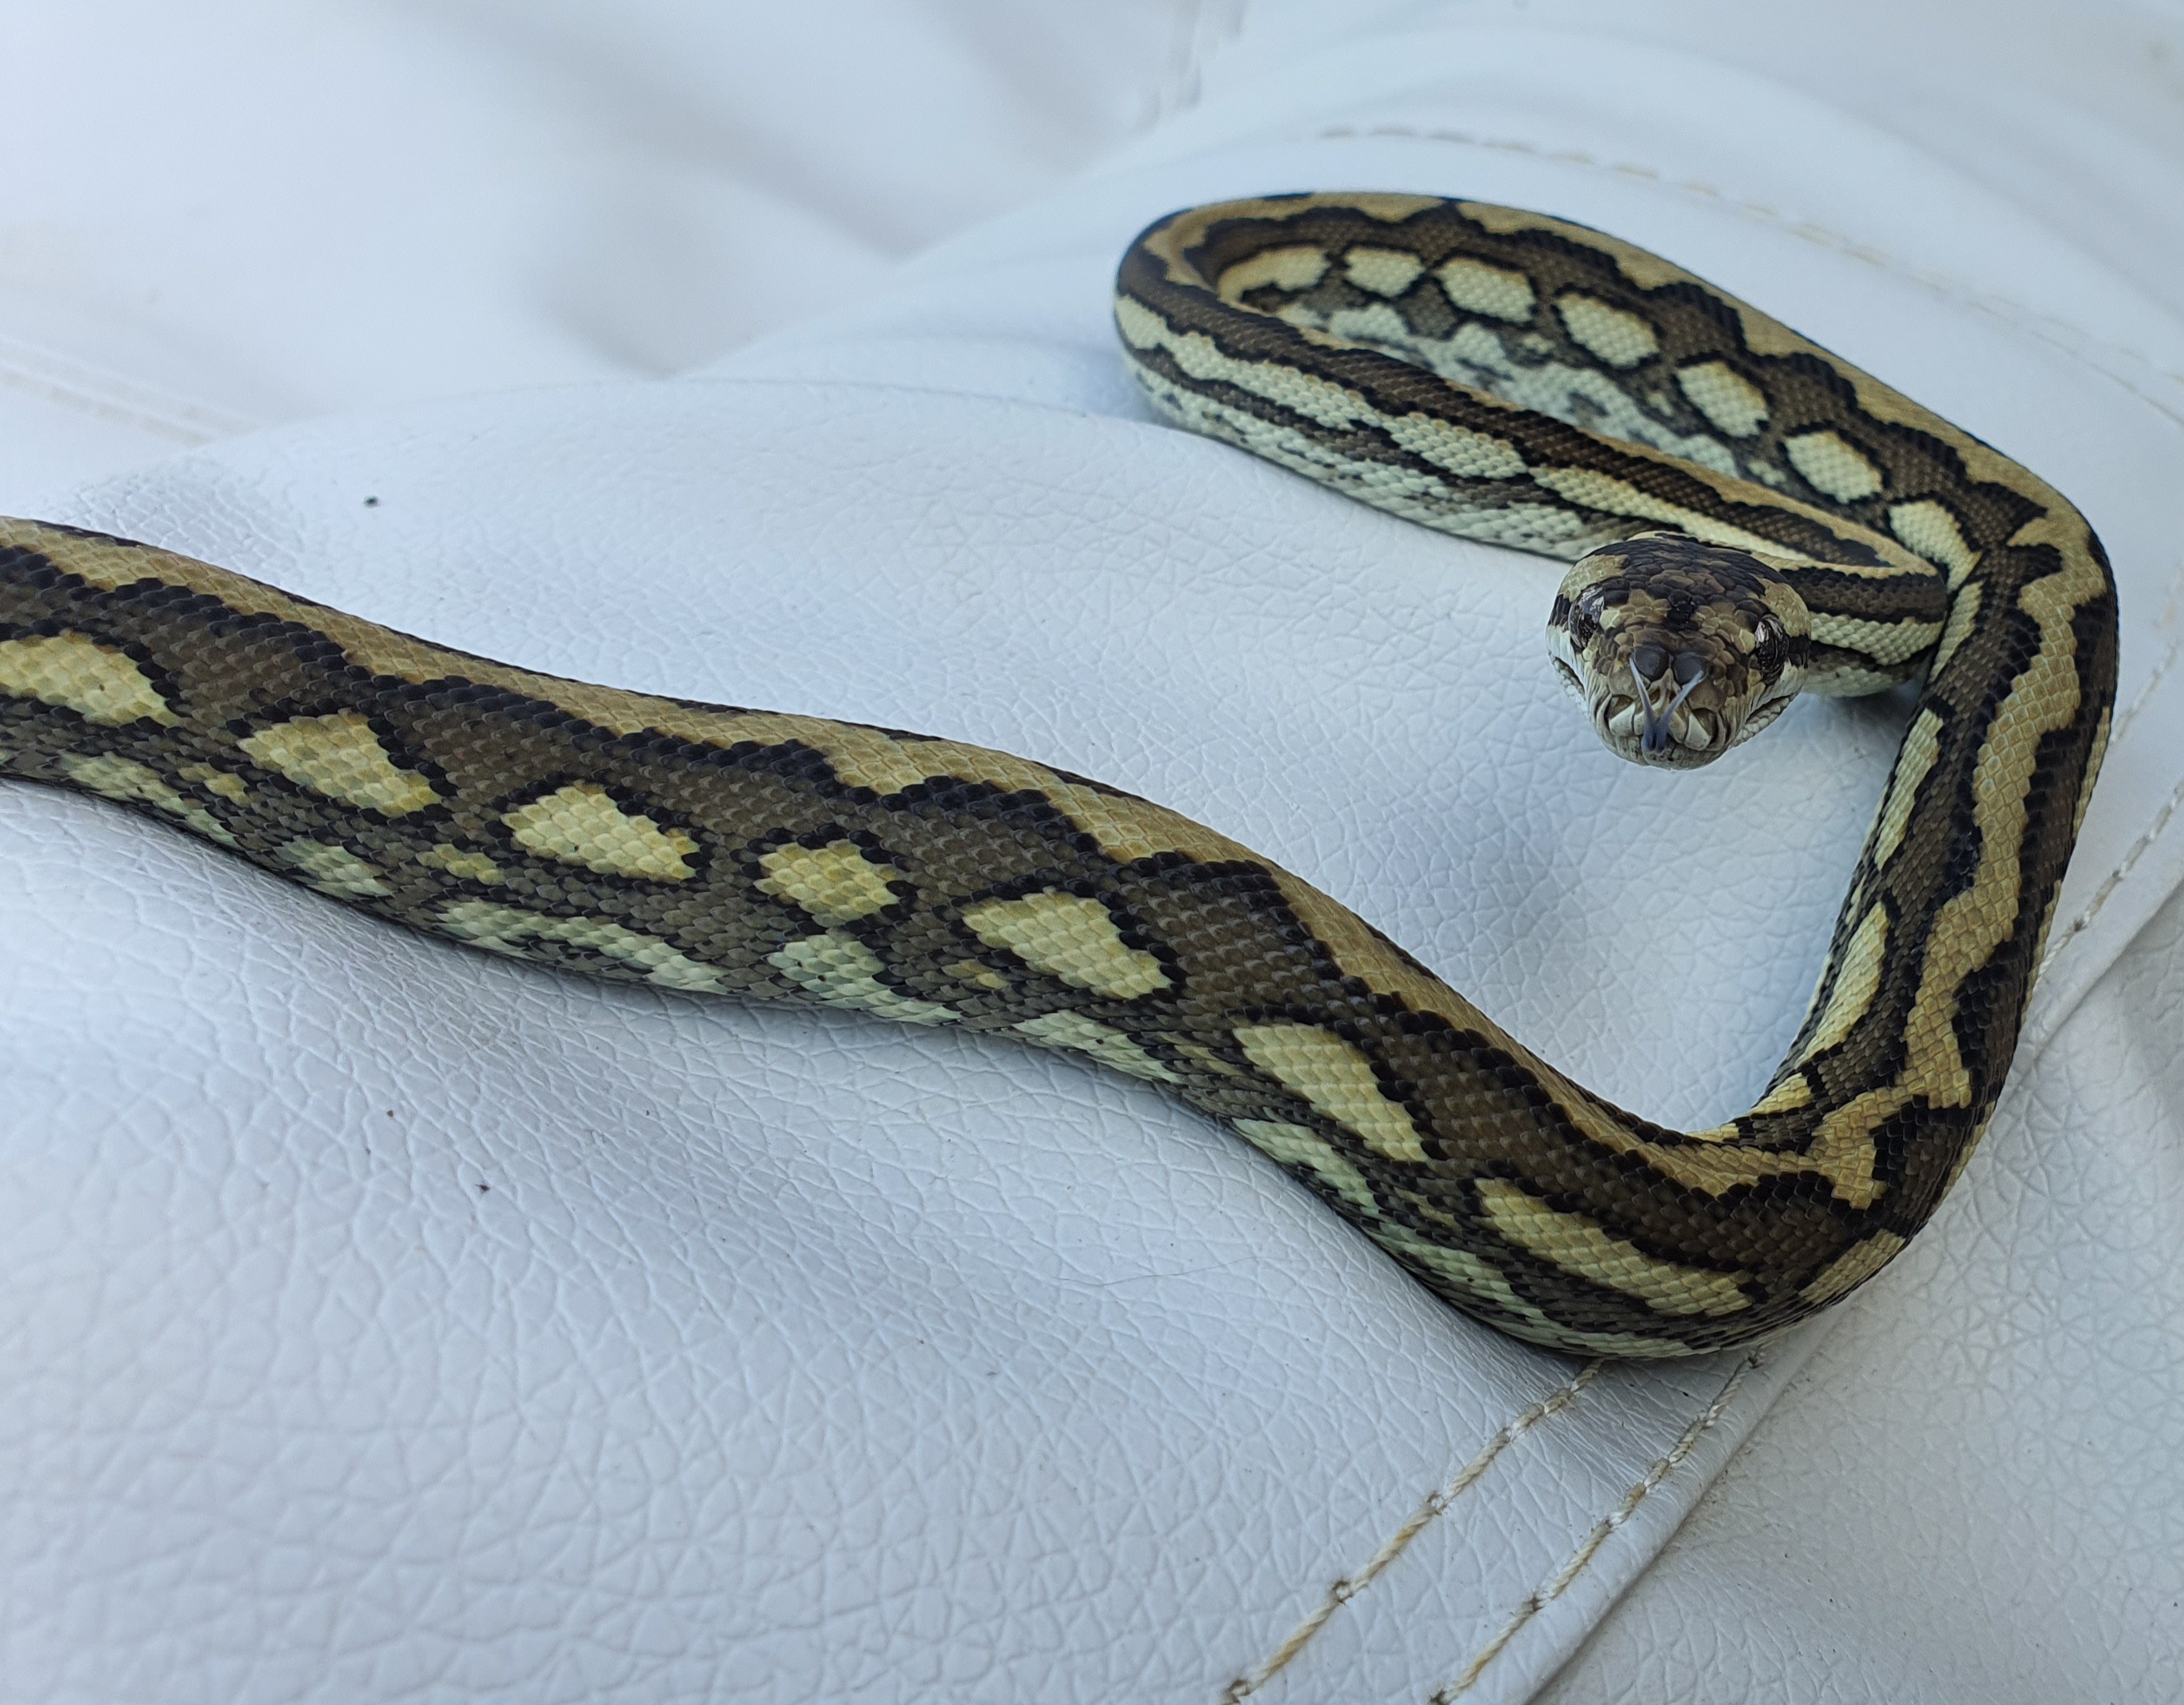 Tiger Coastal Carpet Python by Ig Exotics